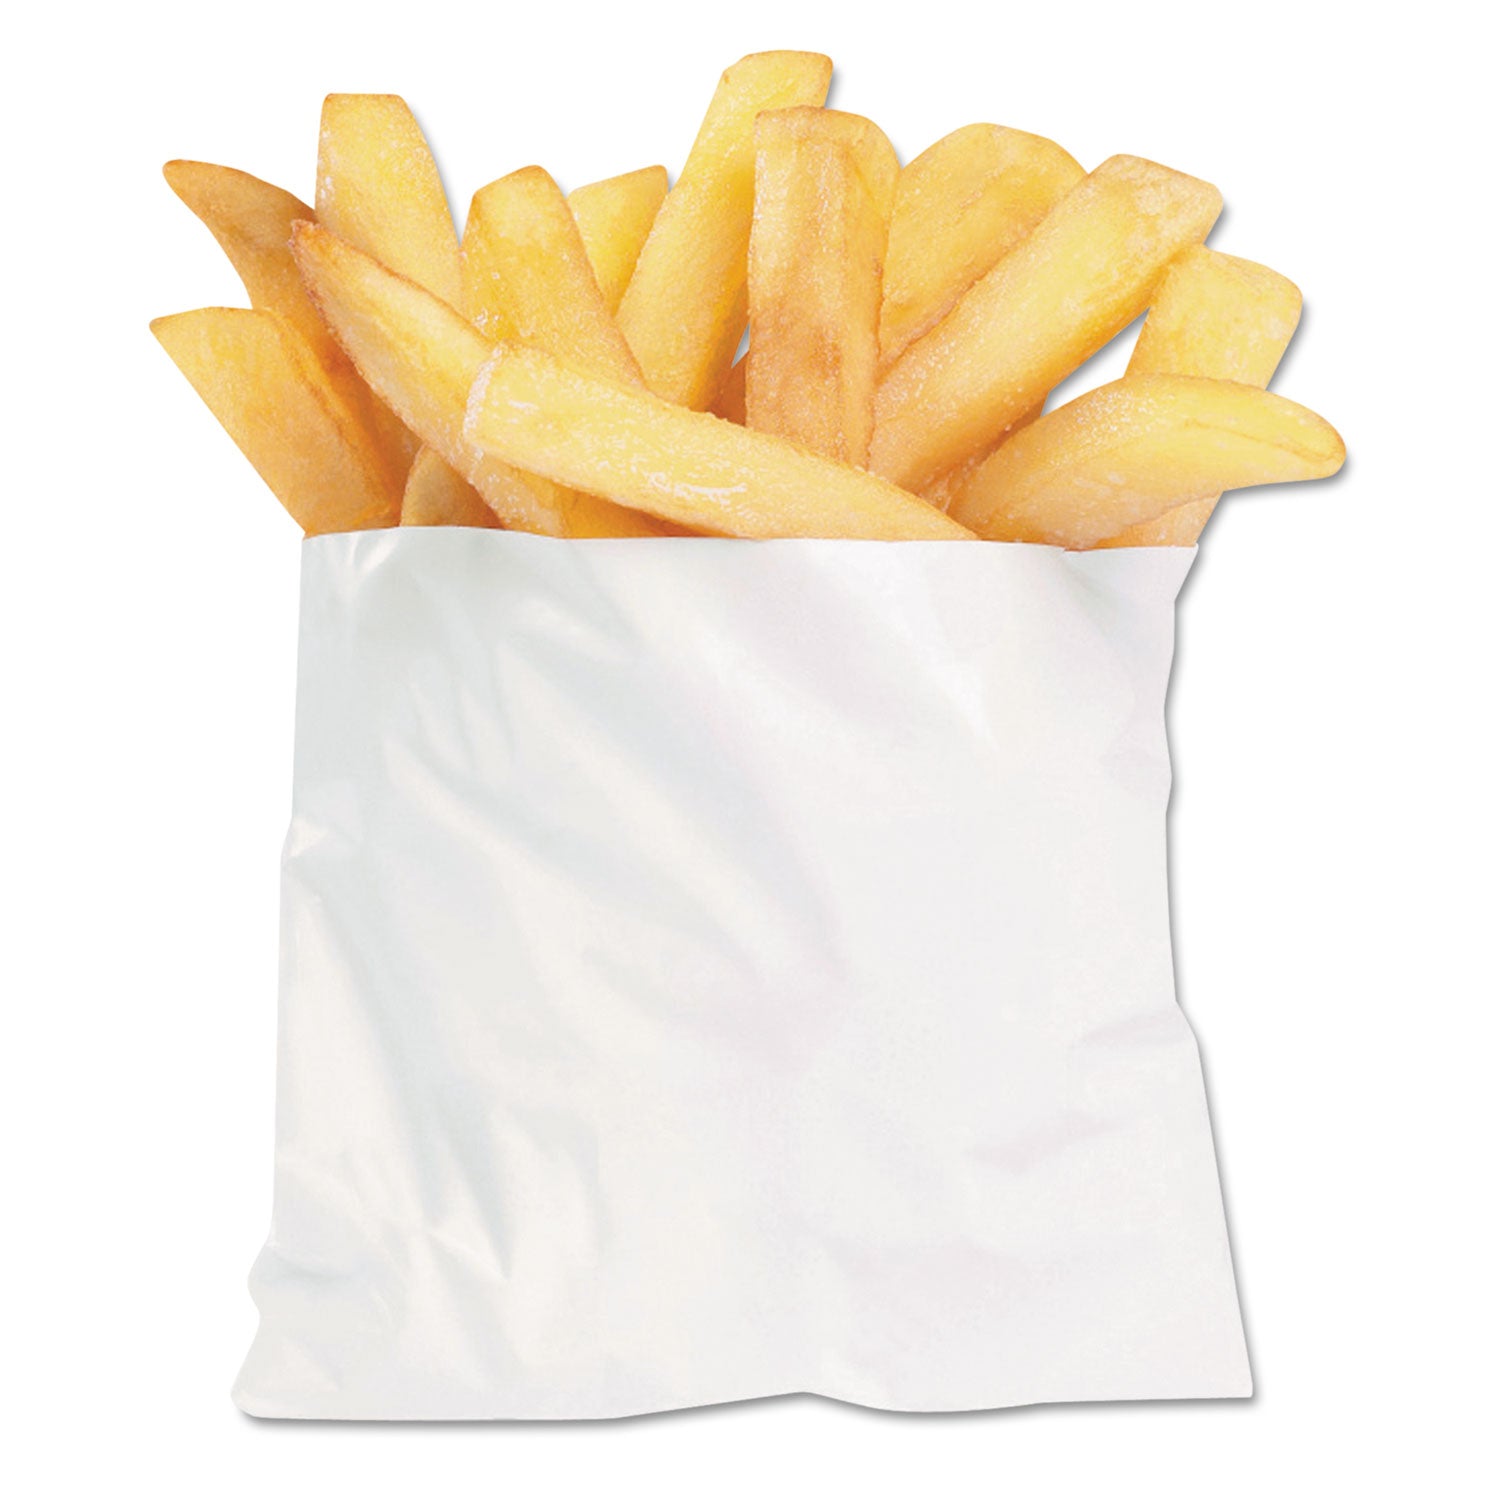 french-fry-bags-45-x-35-white-2000-carton_bgc450003 - 1